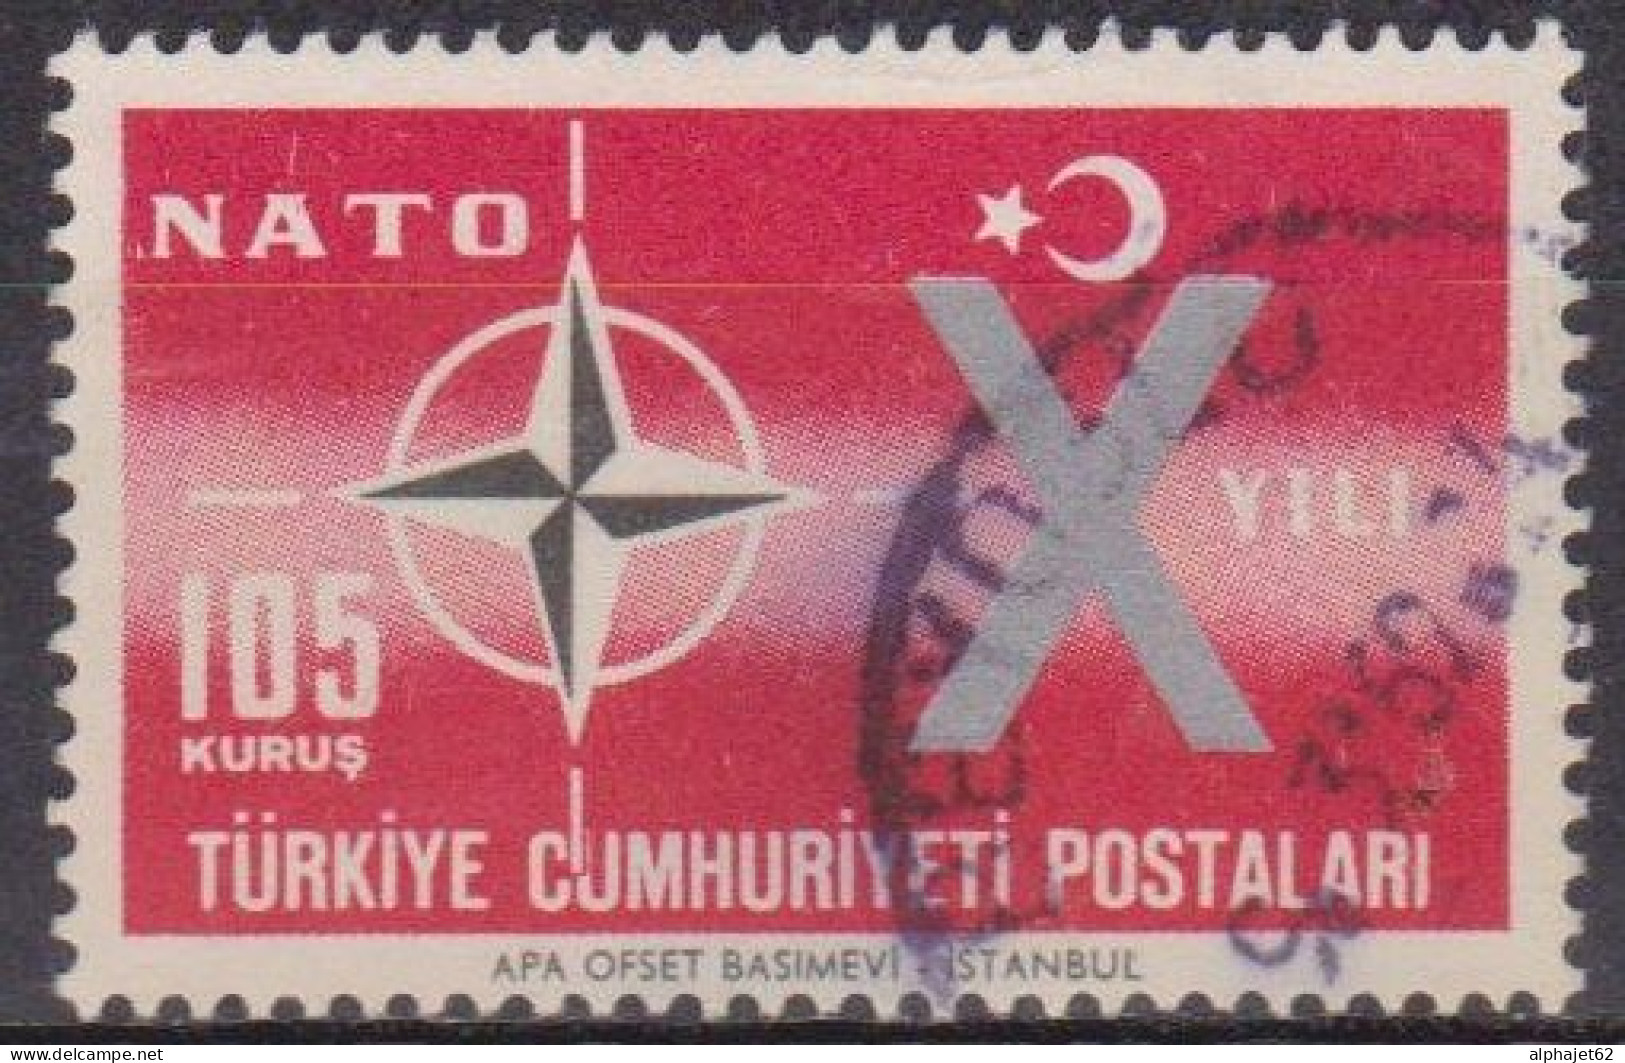 1962 - TURQUIE - 10° Anniversaire De L'OTAN - N° 1615 - Used Stamps